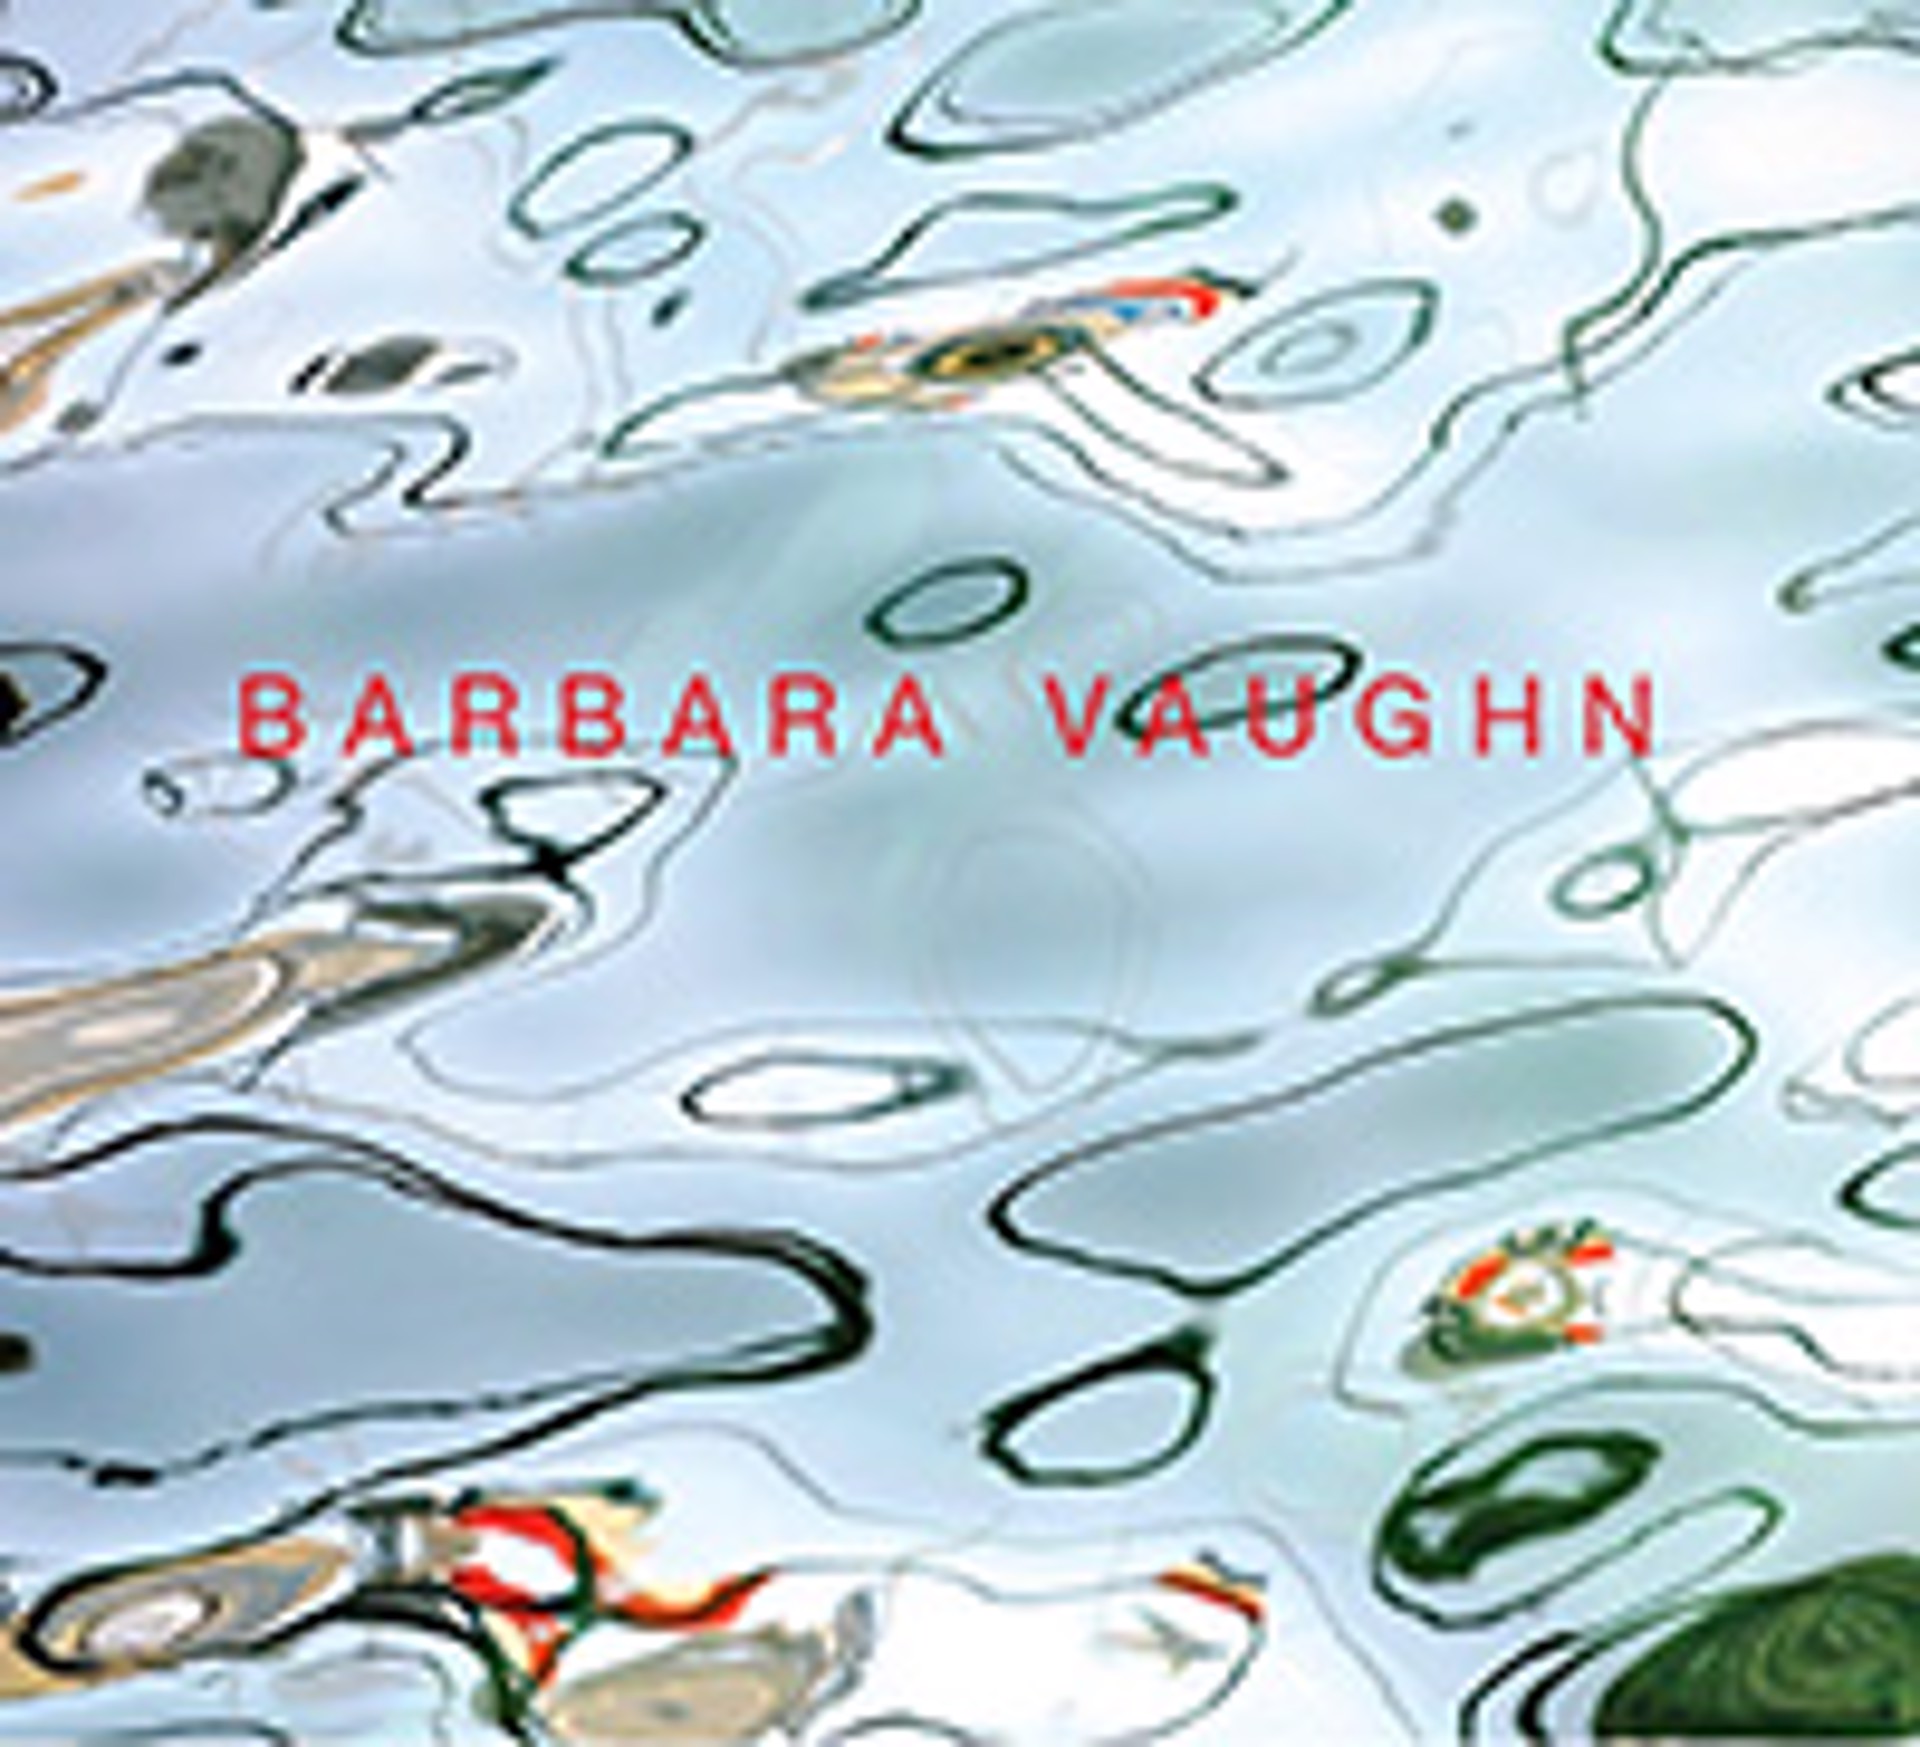 Barbara Vaughn: Photographs by Barbara Vaughn